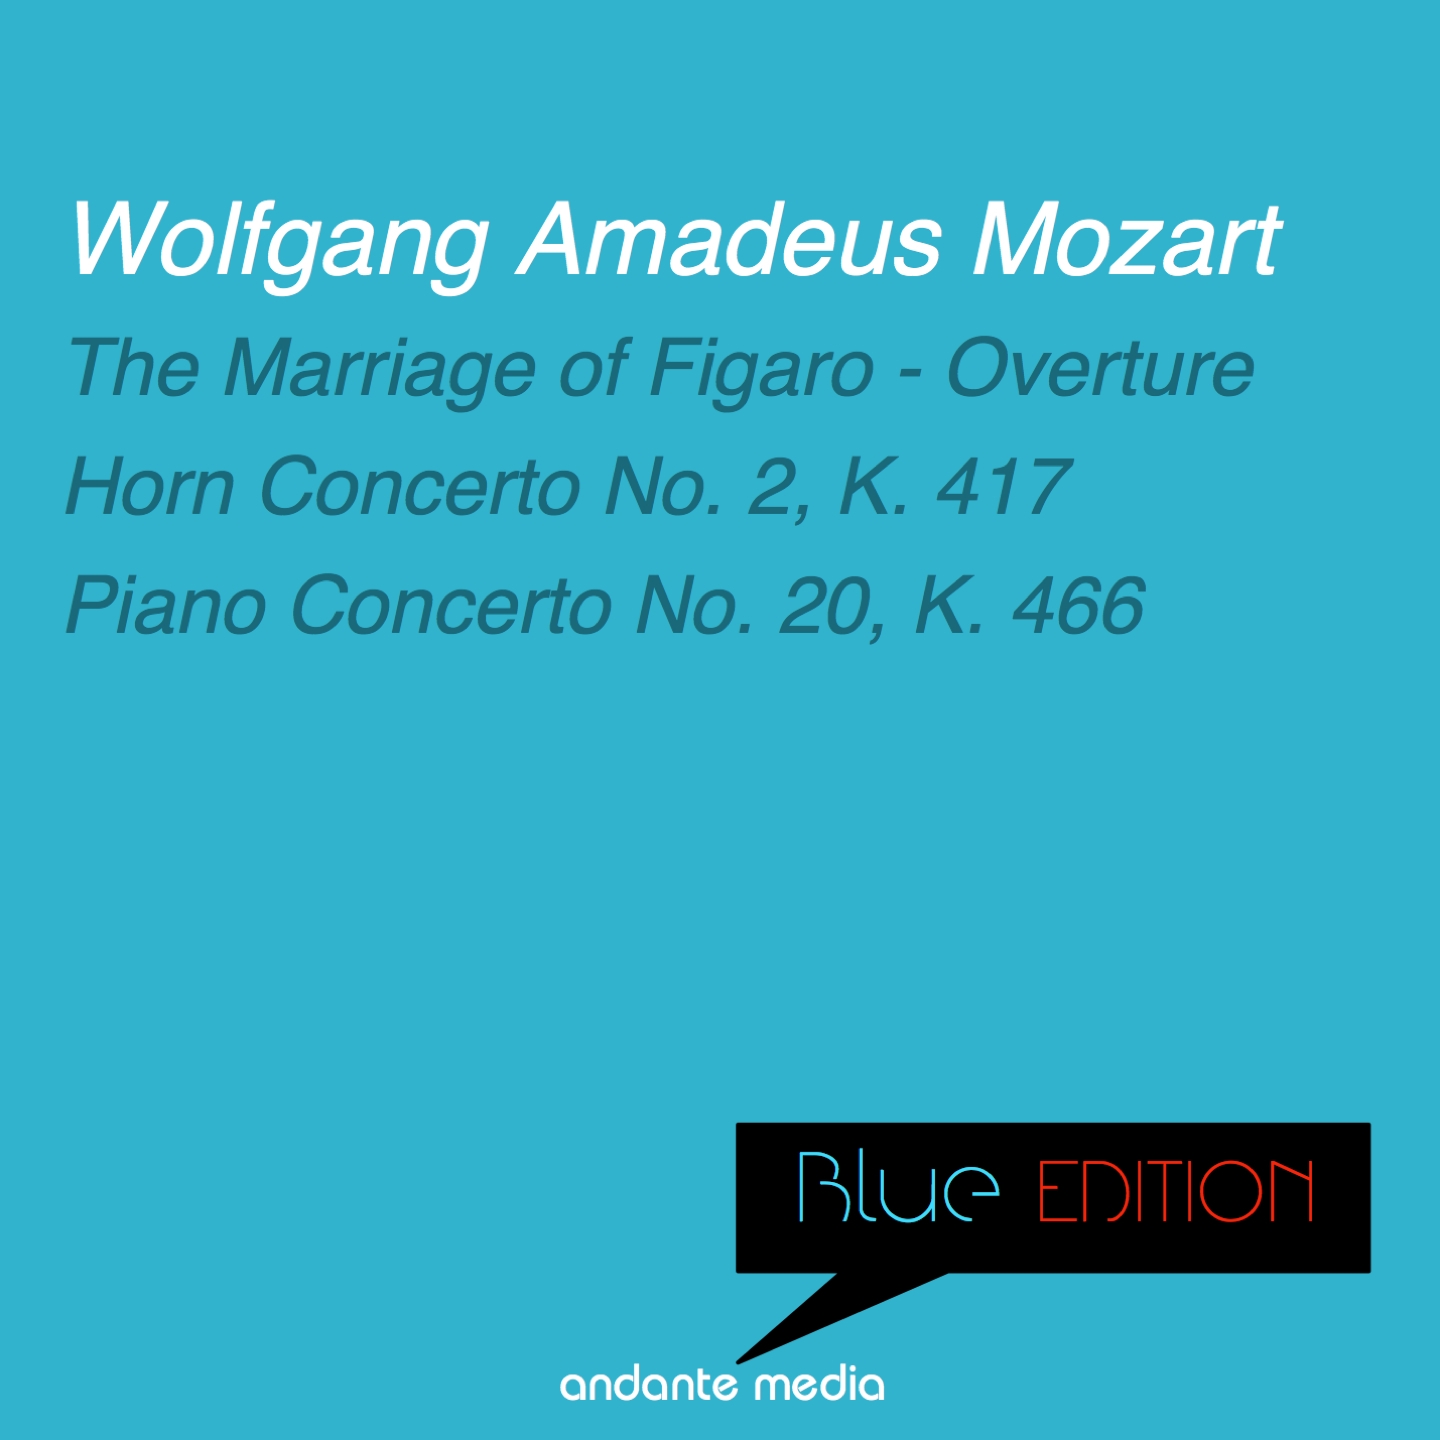 Horn Concerto No. 3 in E-Flat Major, K. 447: III. Allegro